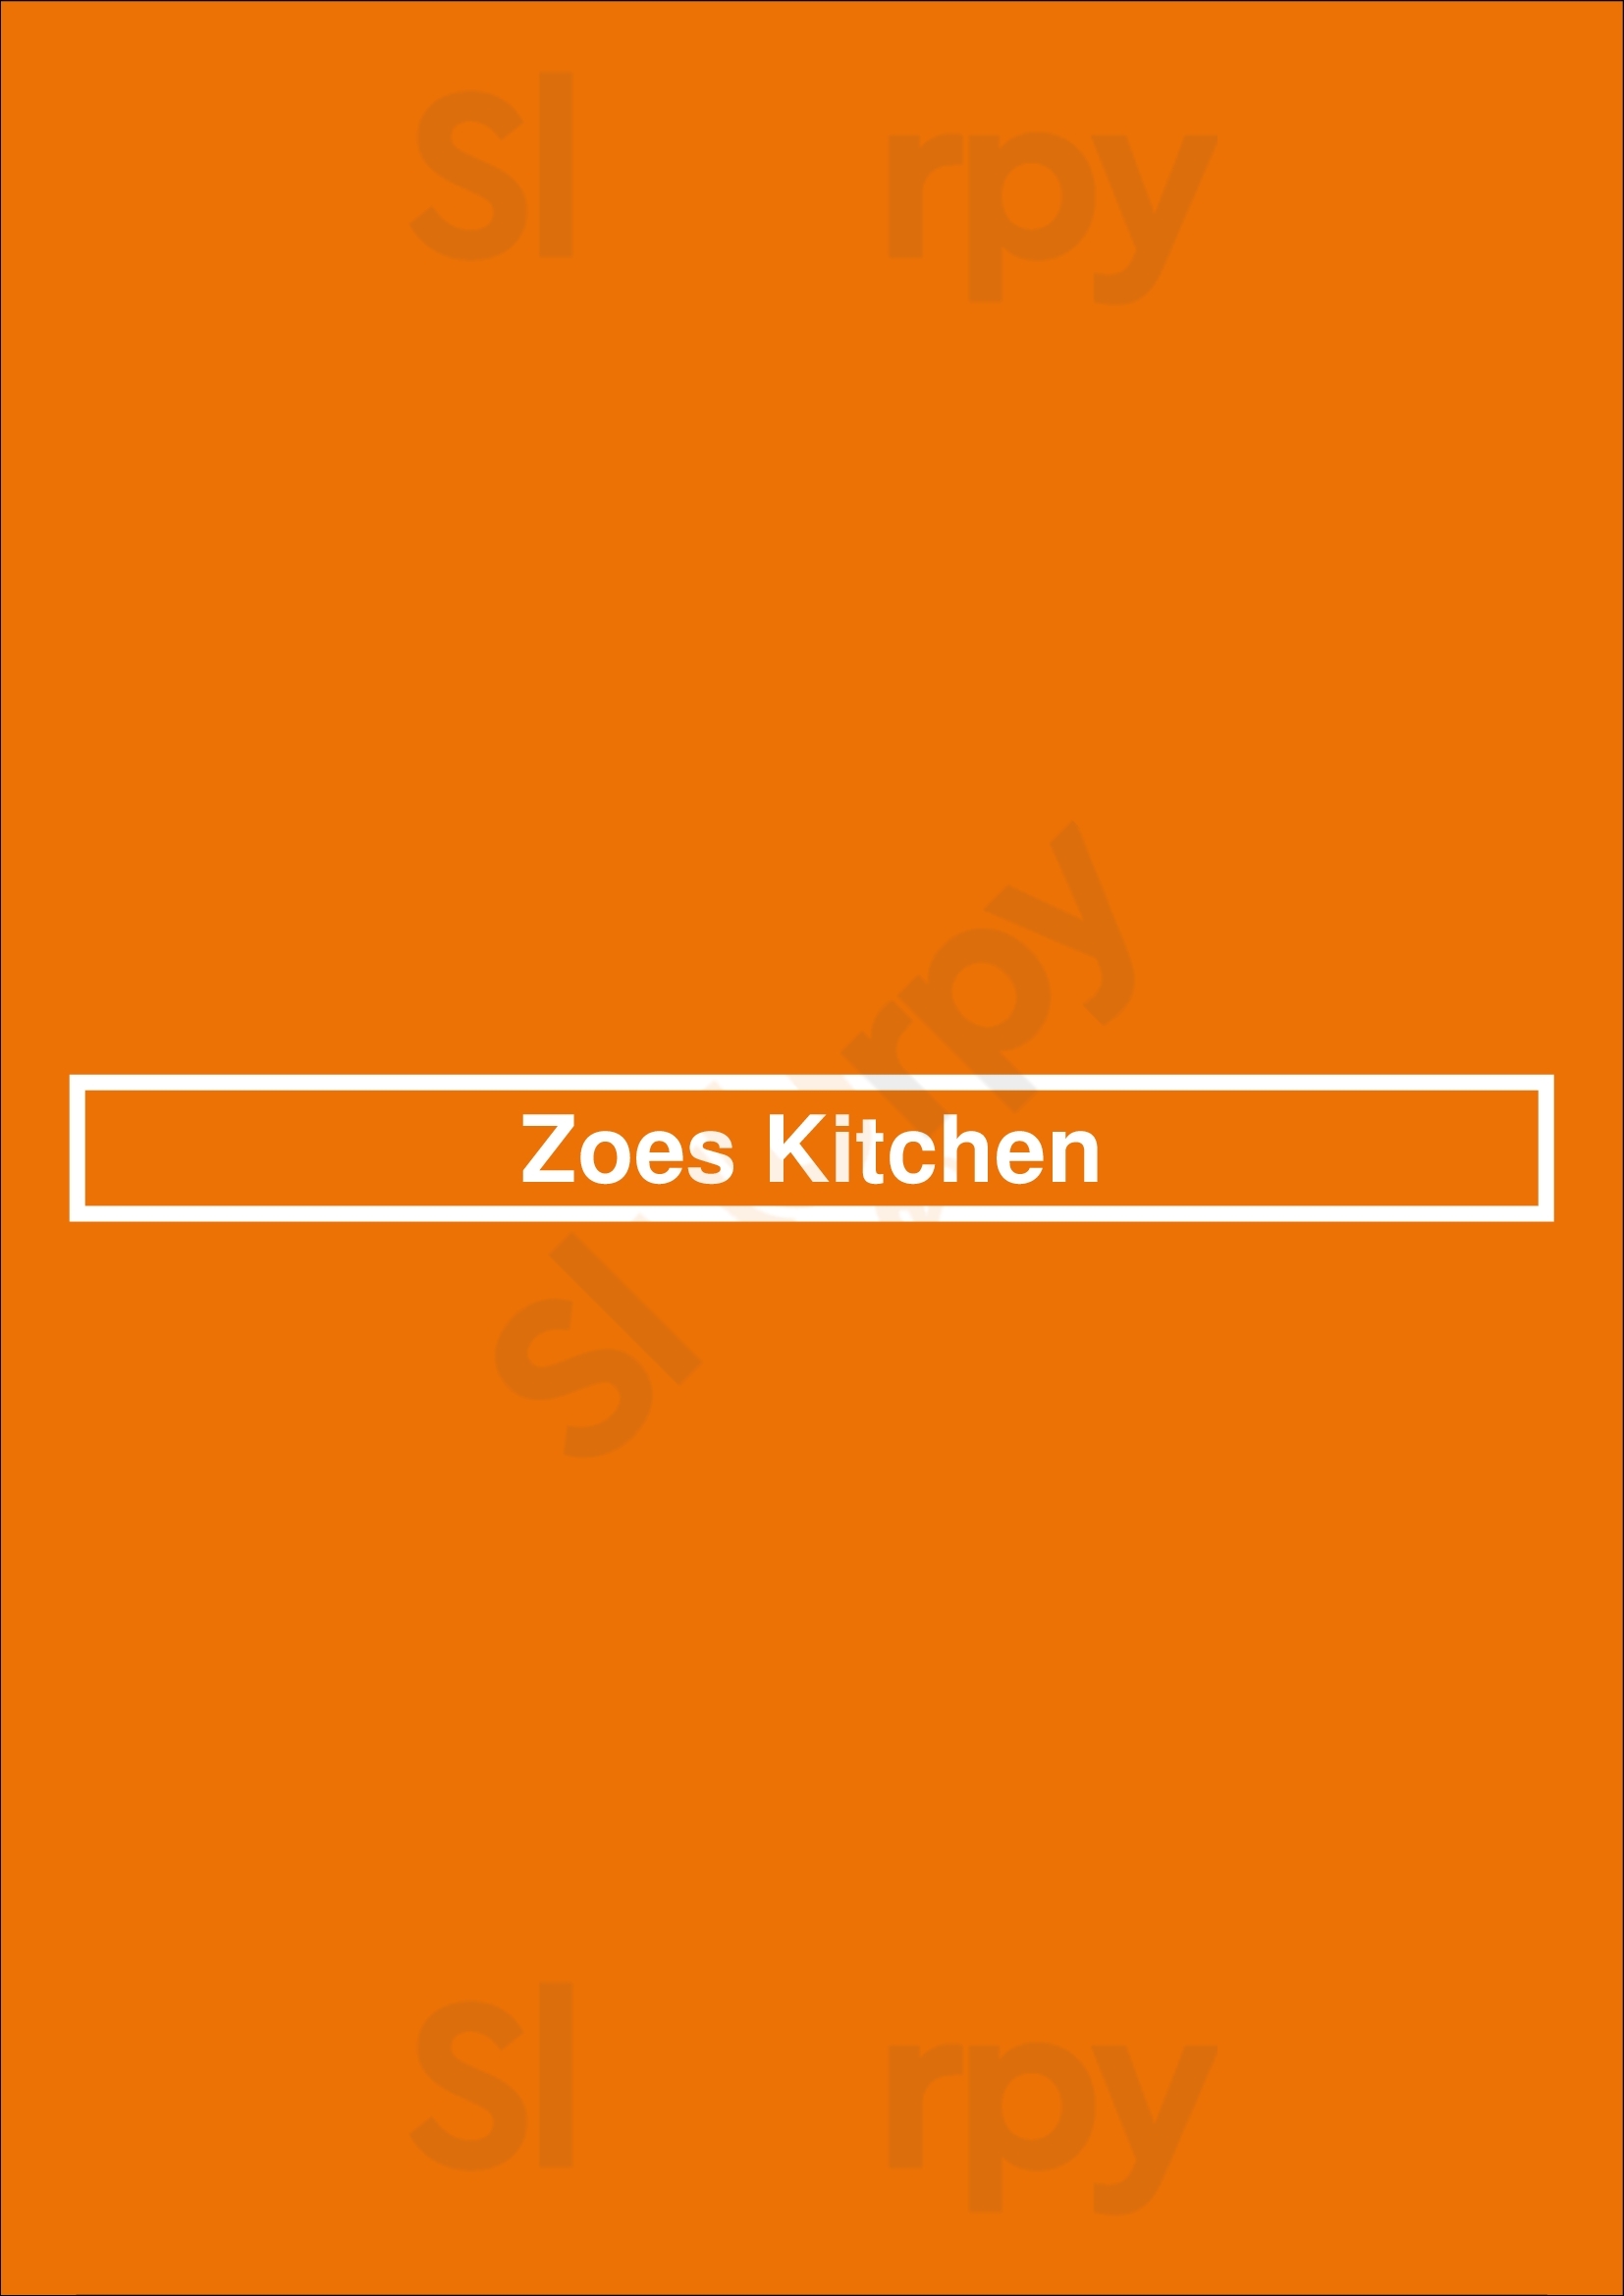 Zoes Kitchen Cypress Menu - 1